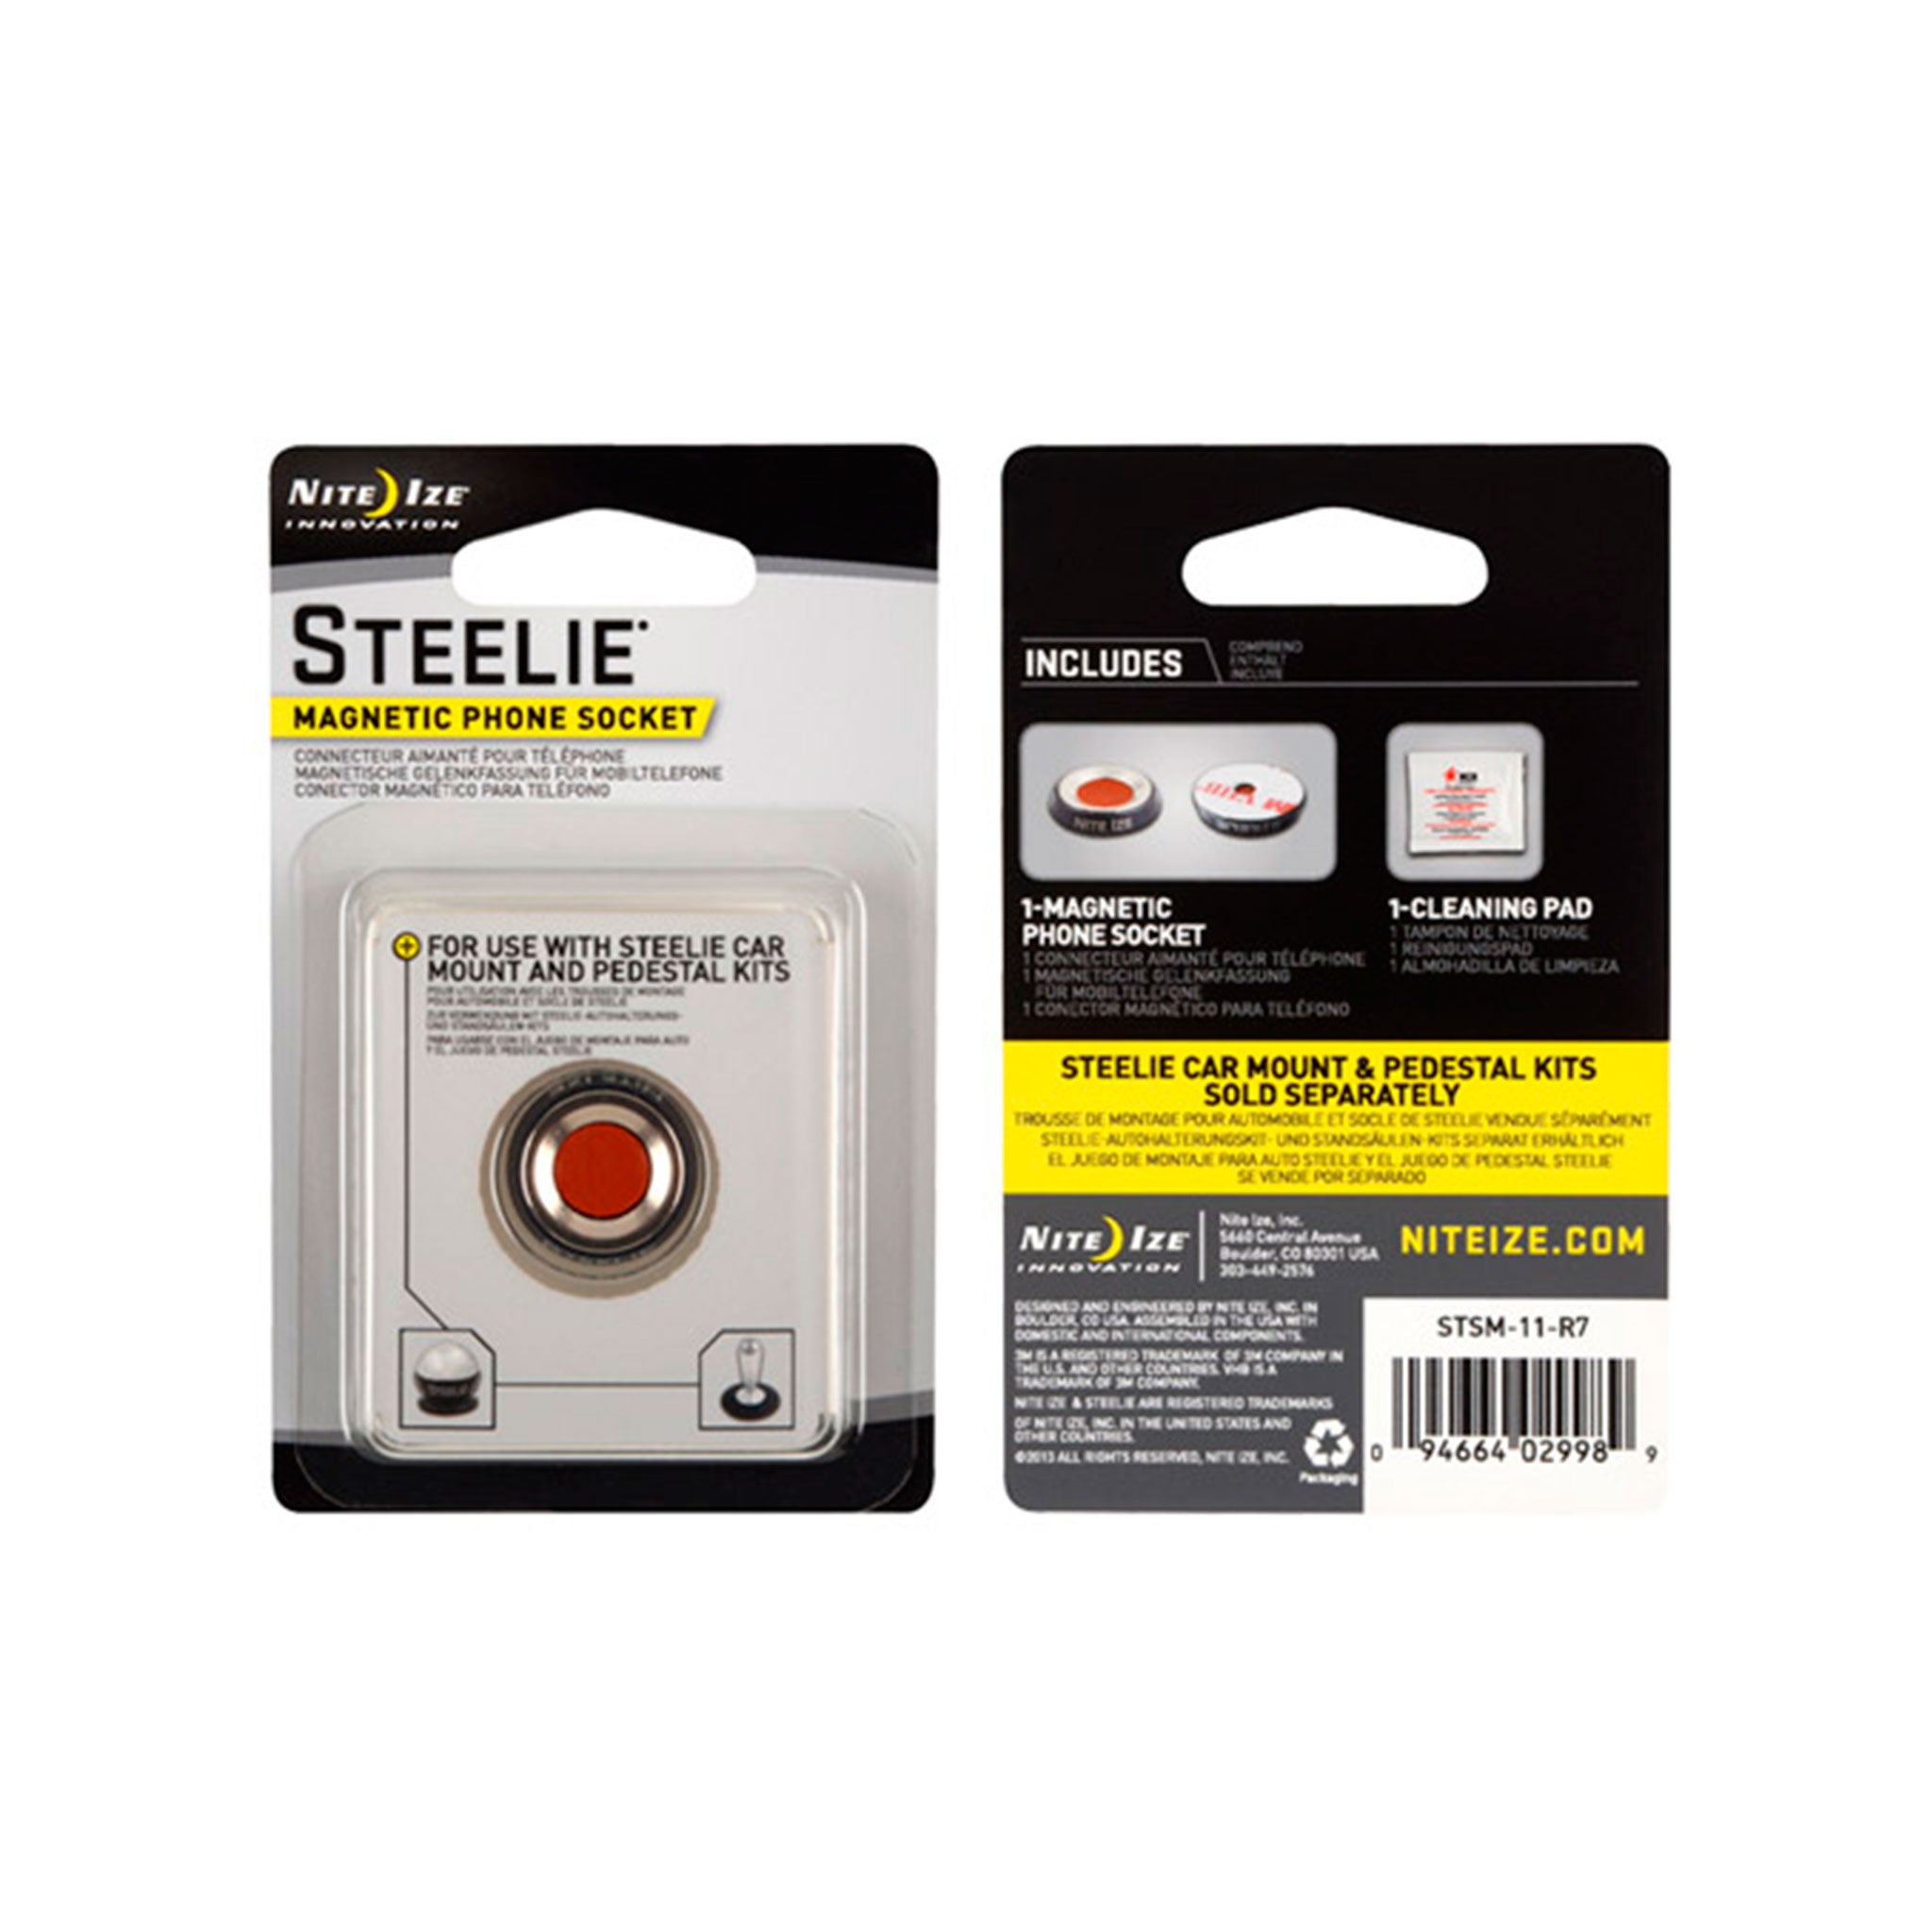 Nite Ize - Steelie Phone Socket Component - Silver And Black